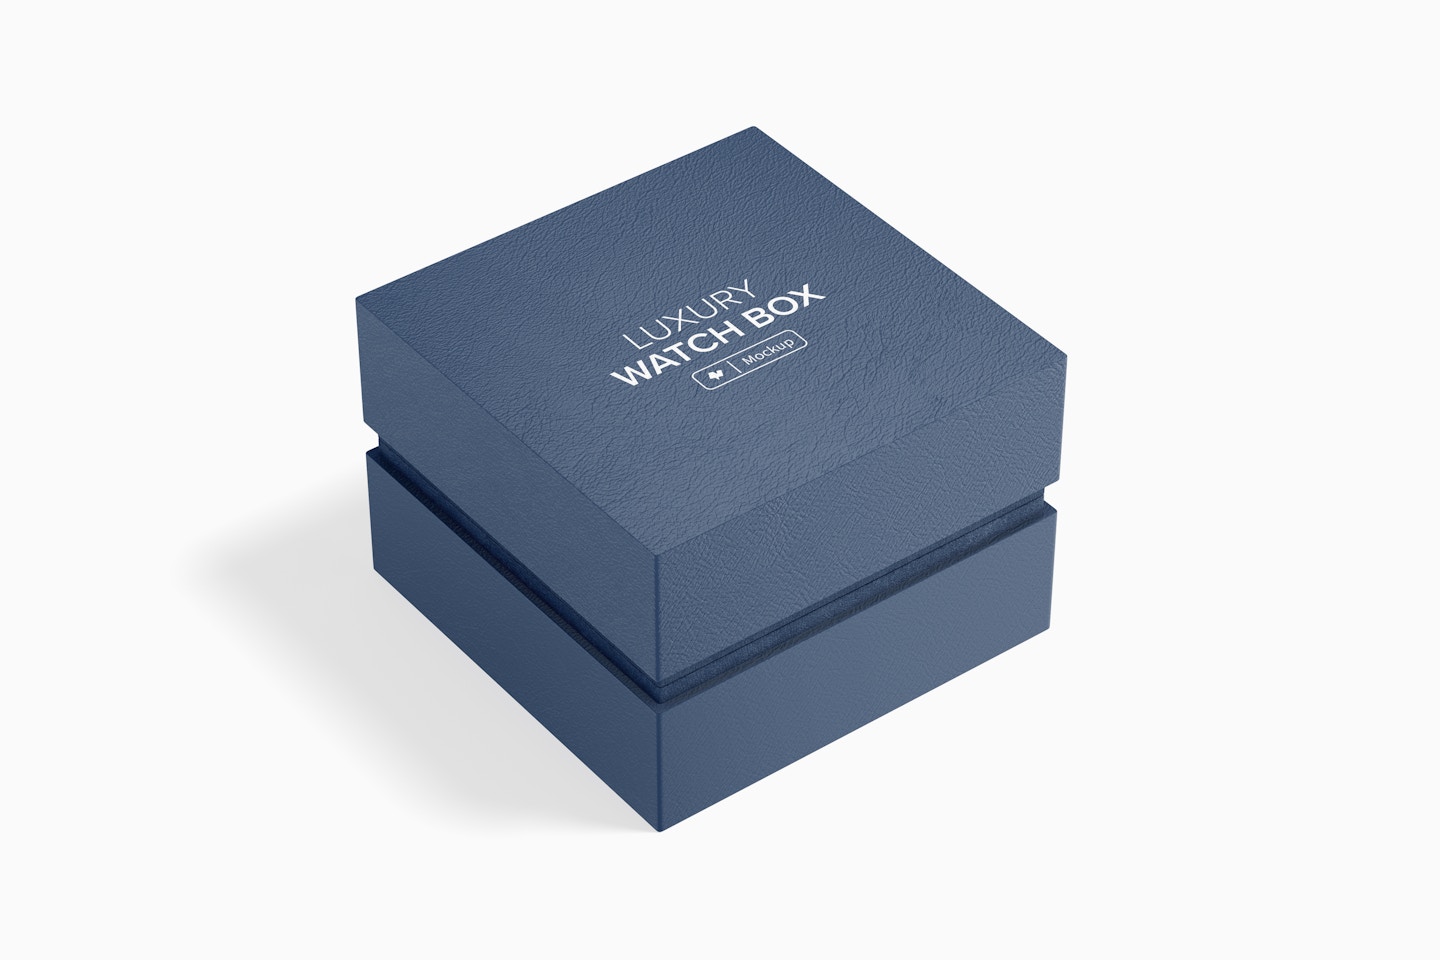 Luxury Watch Box Mockup, Perspective